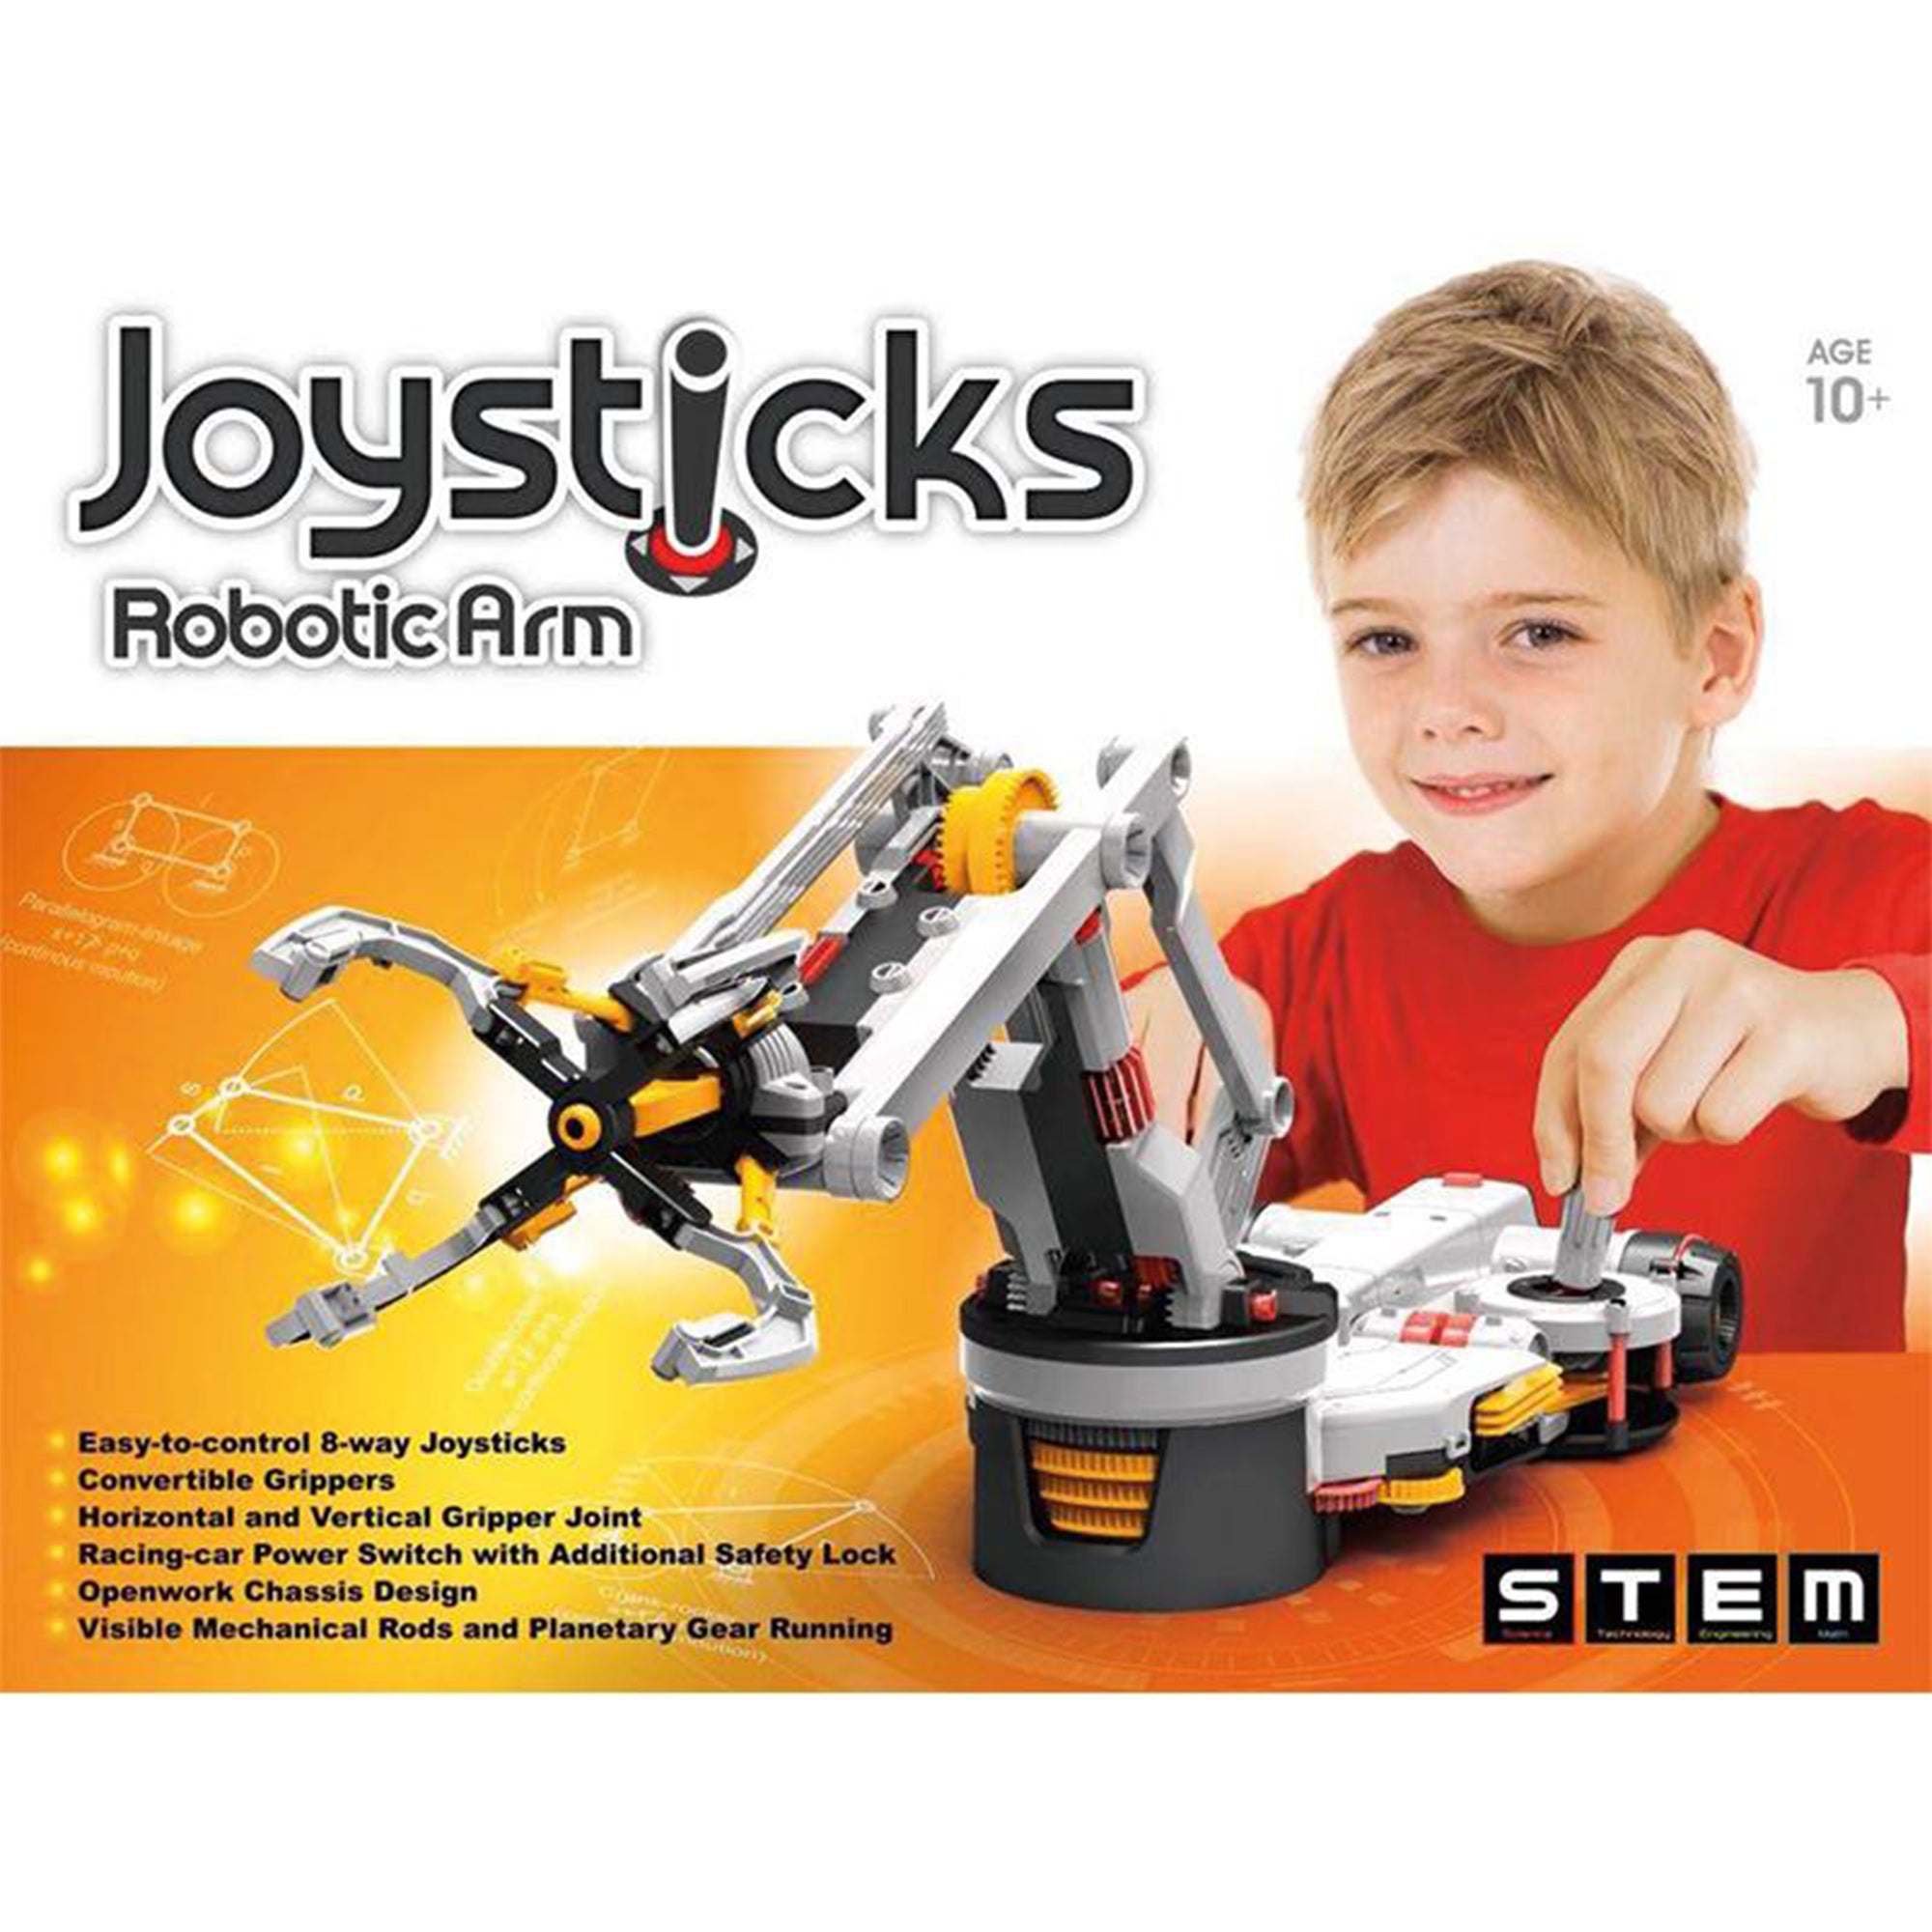 Robot bras hydraulique 3 en 1, jeux educatifs